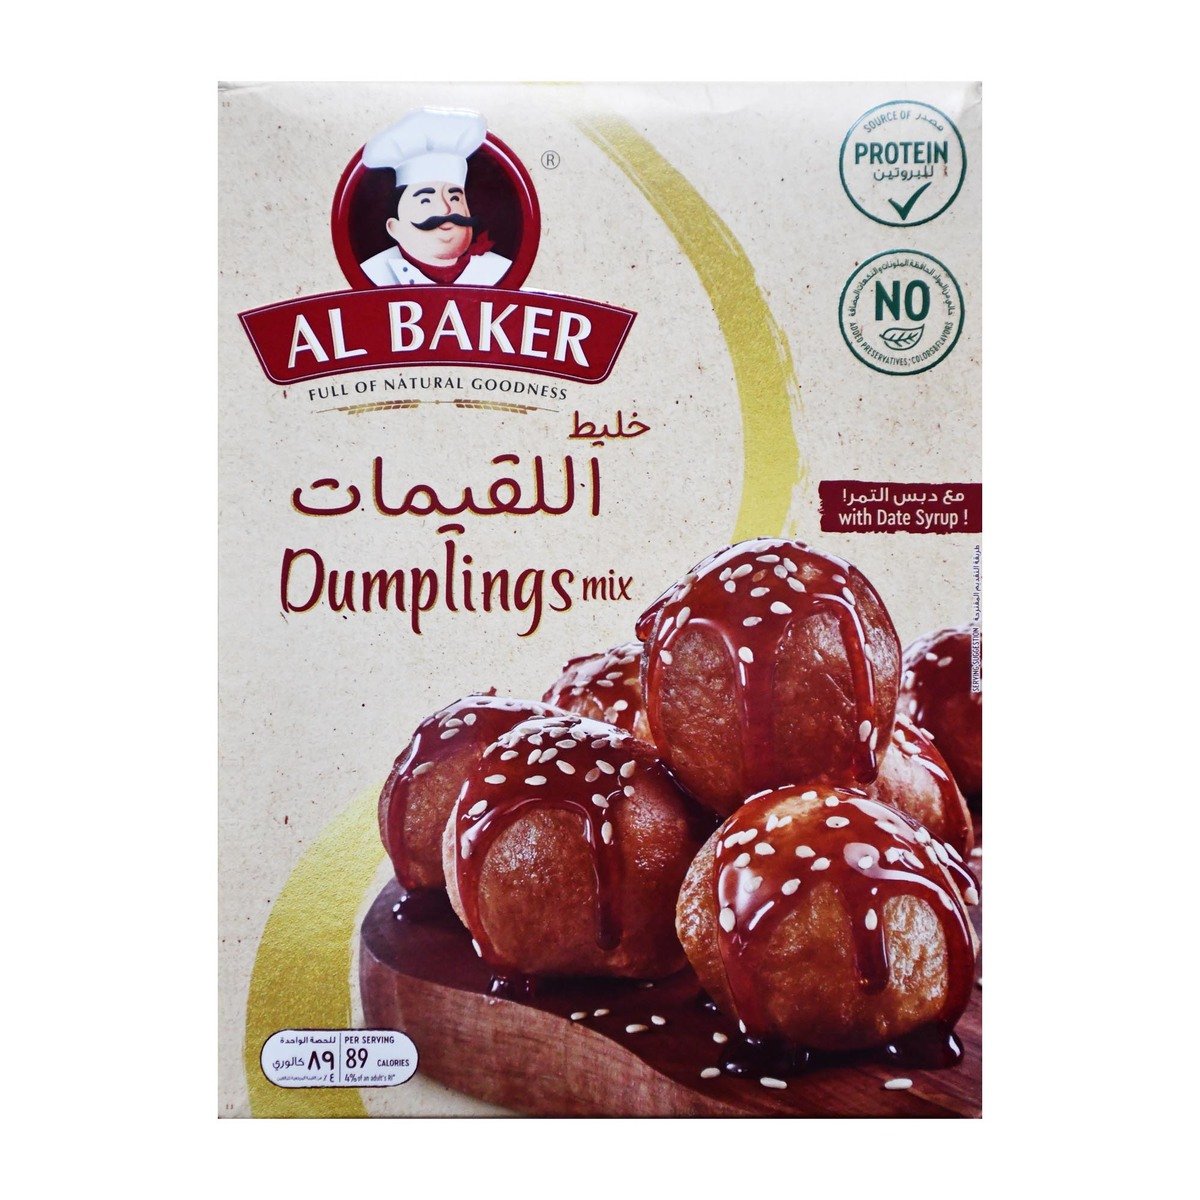 Al Baker Dumplings Mix with Date Syrup 450g